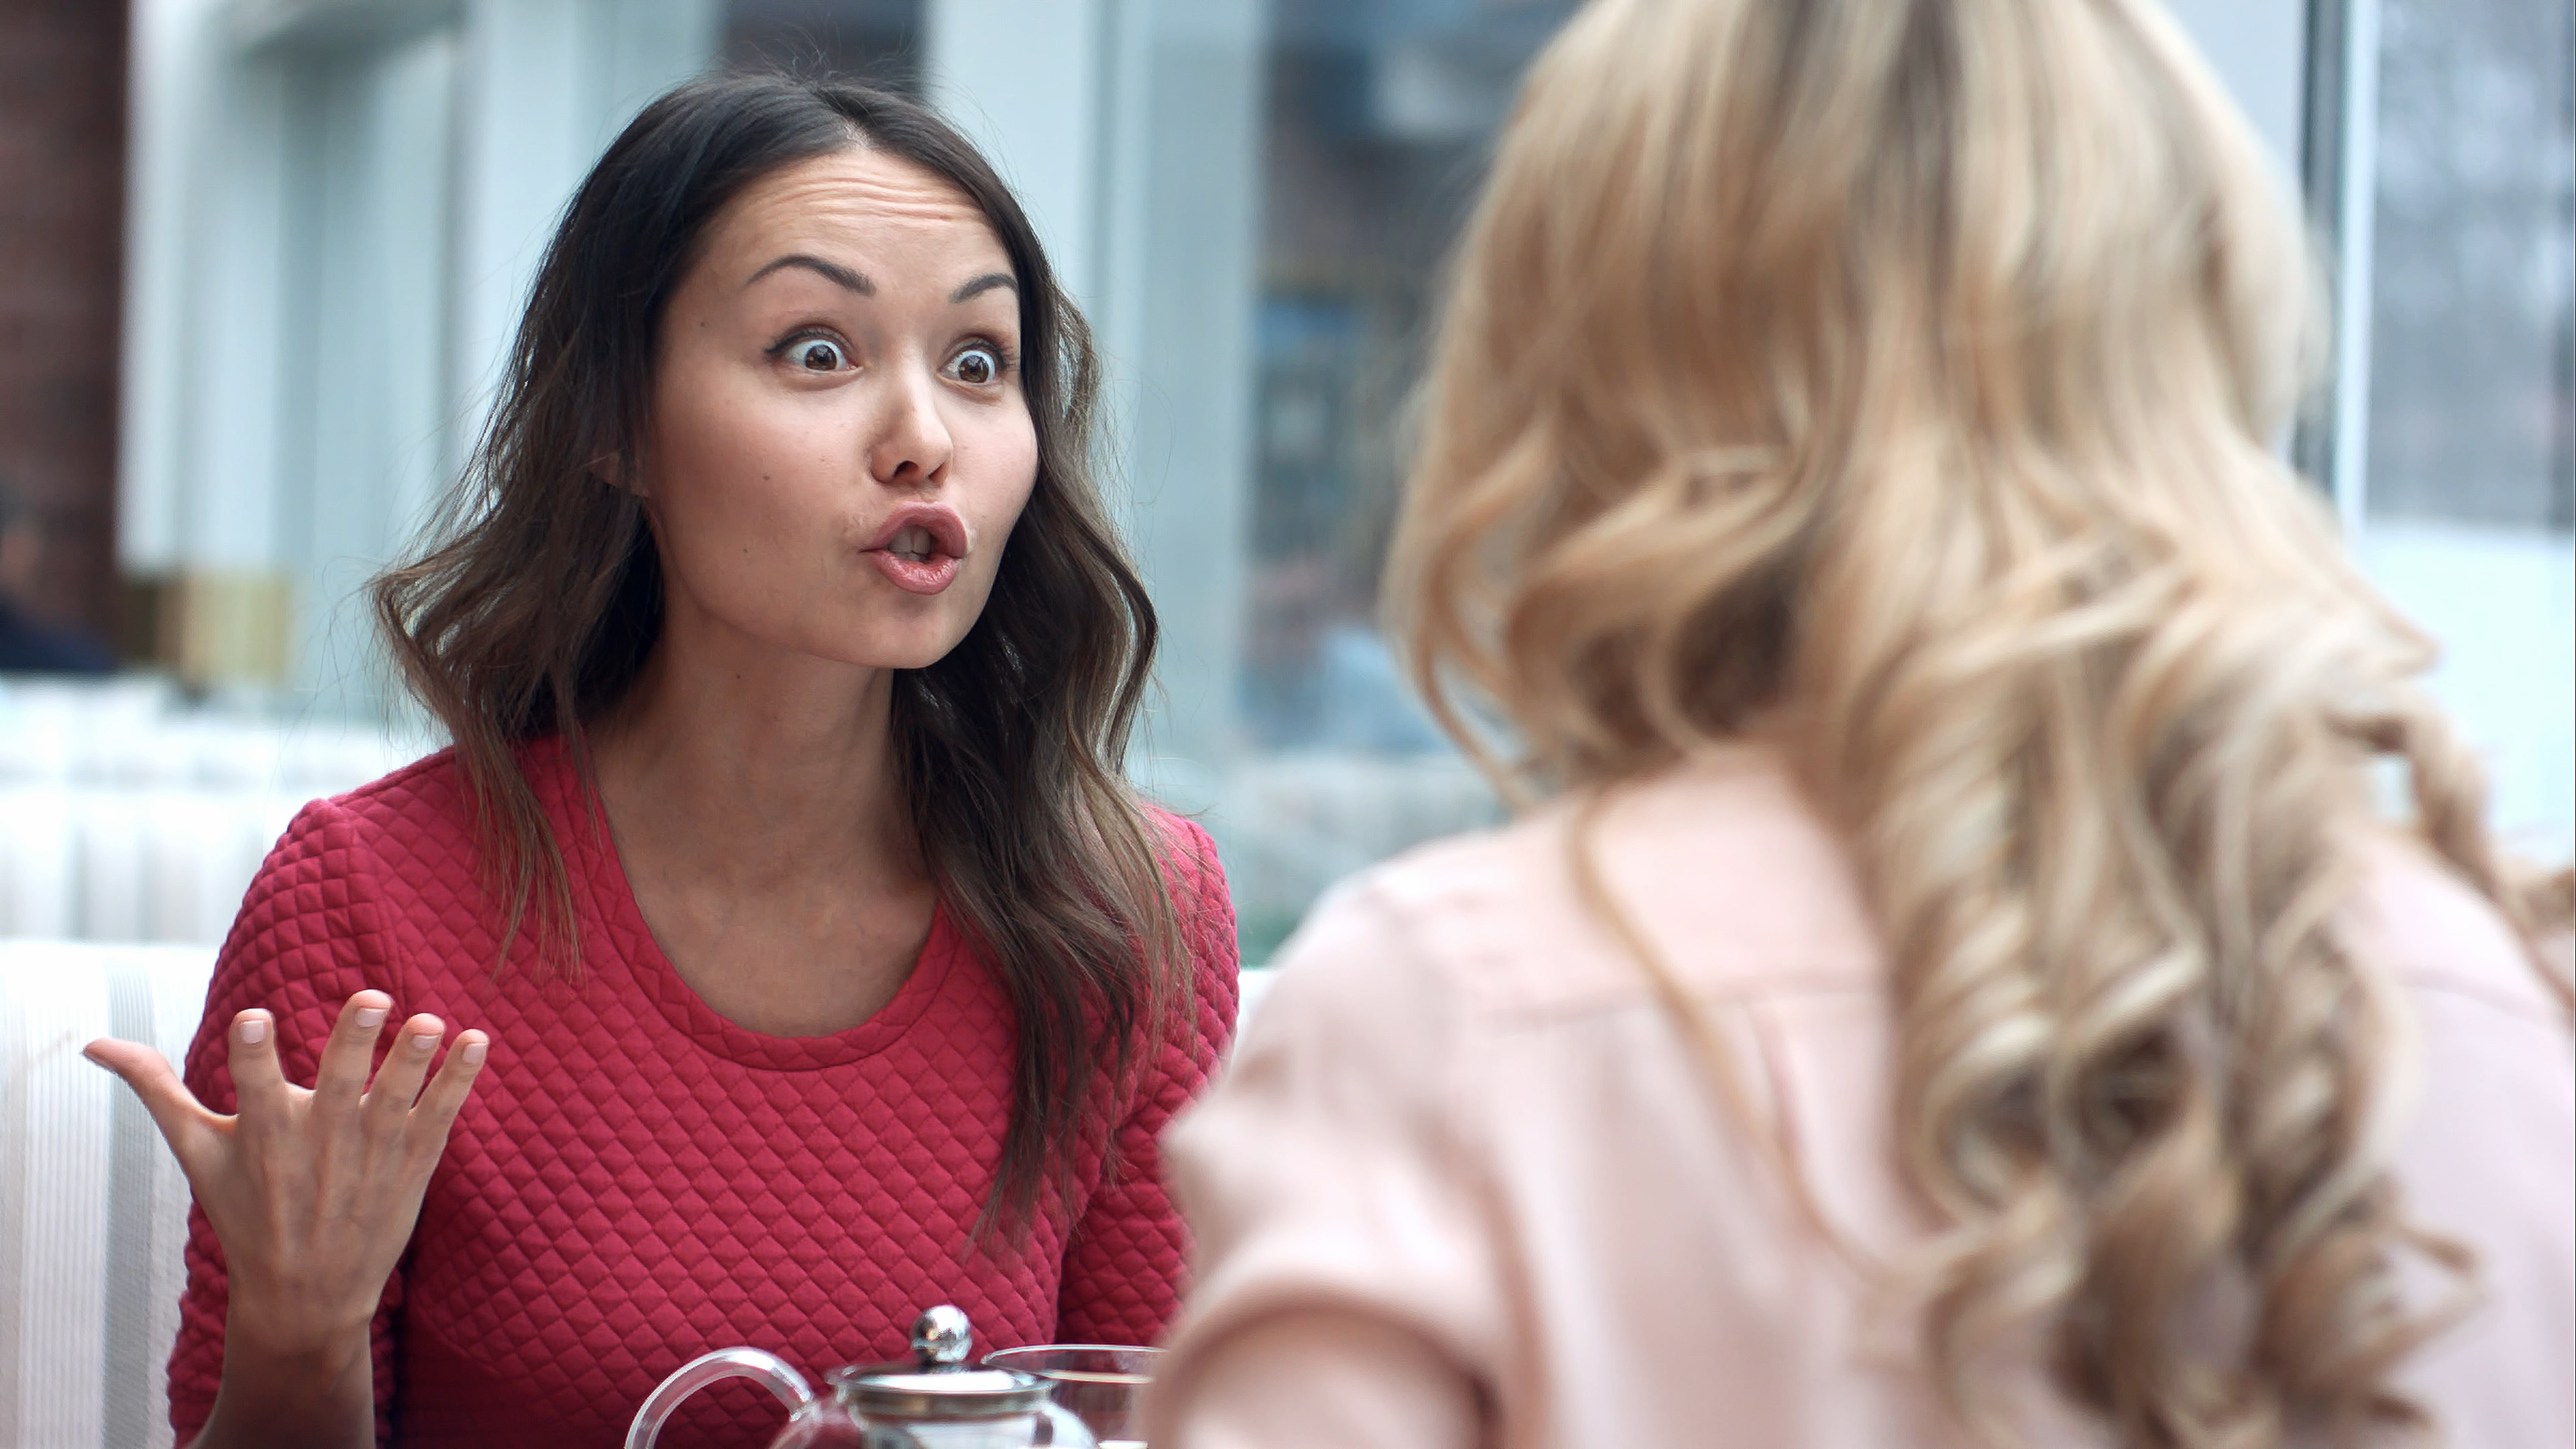 Two girls arguing | Source: Shutterstock